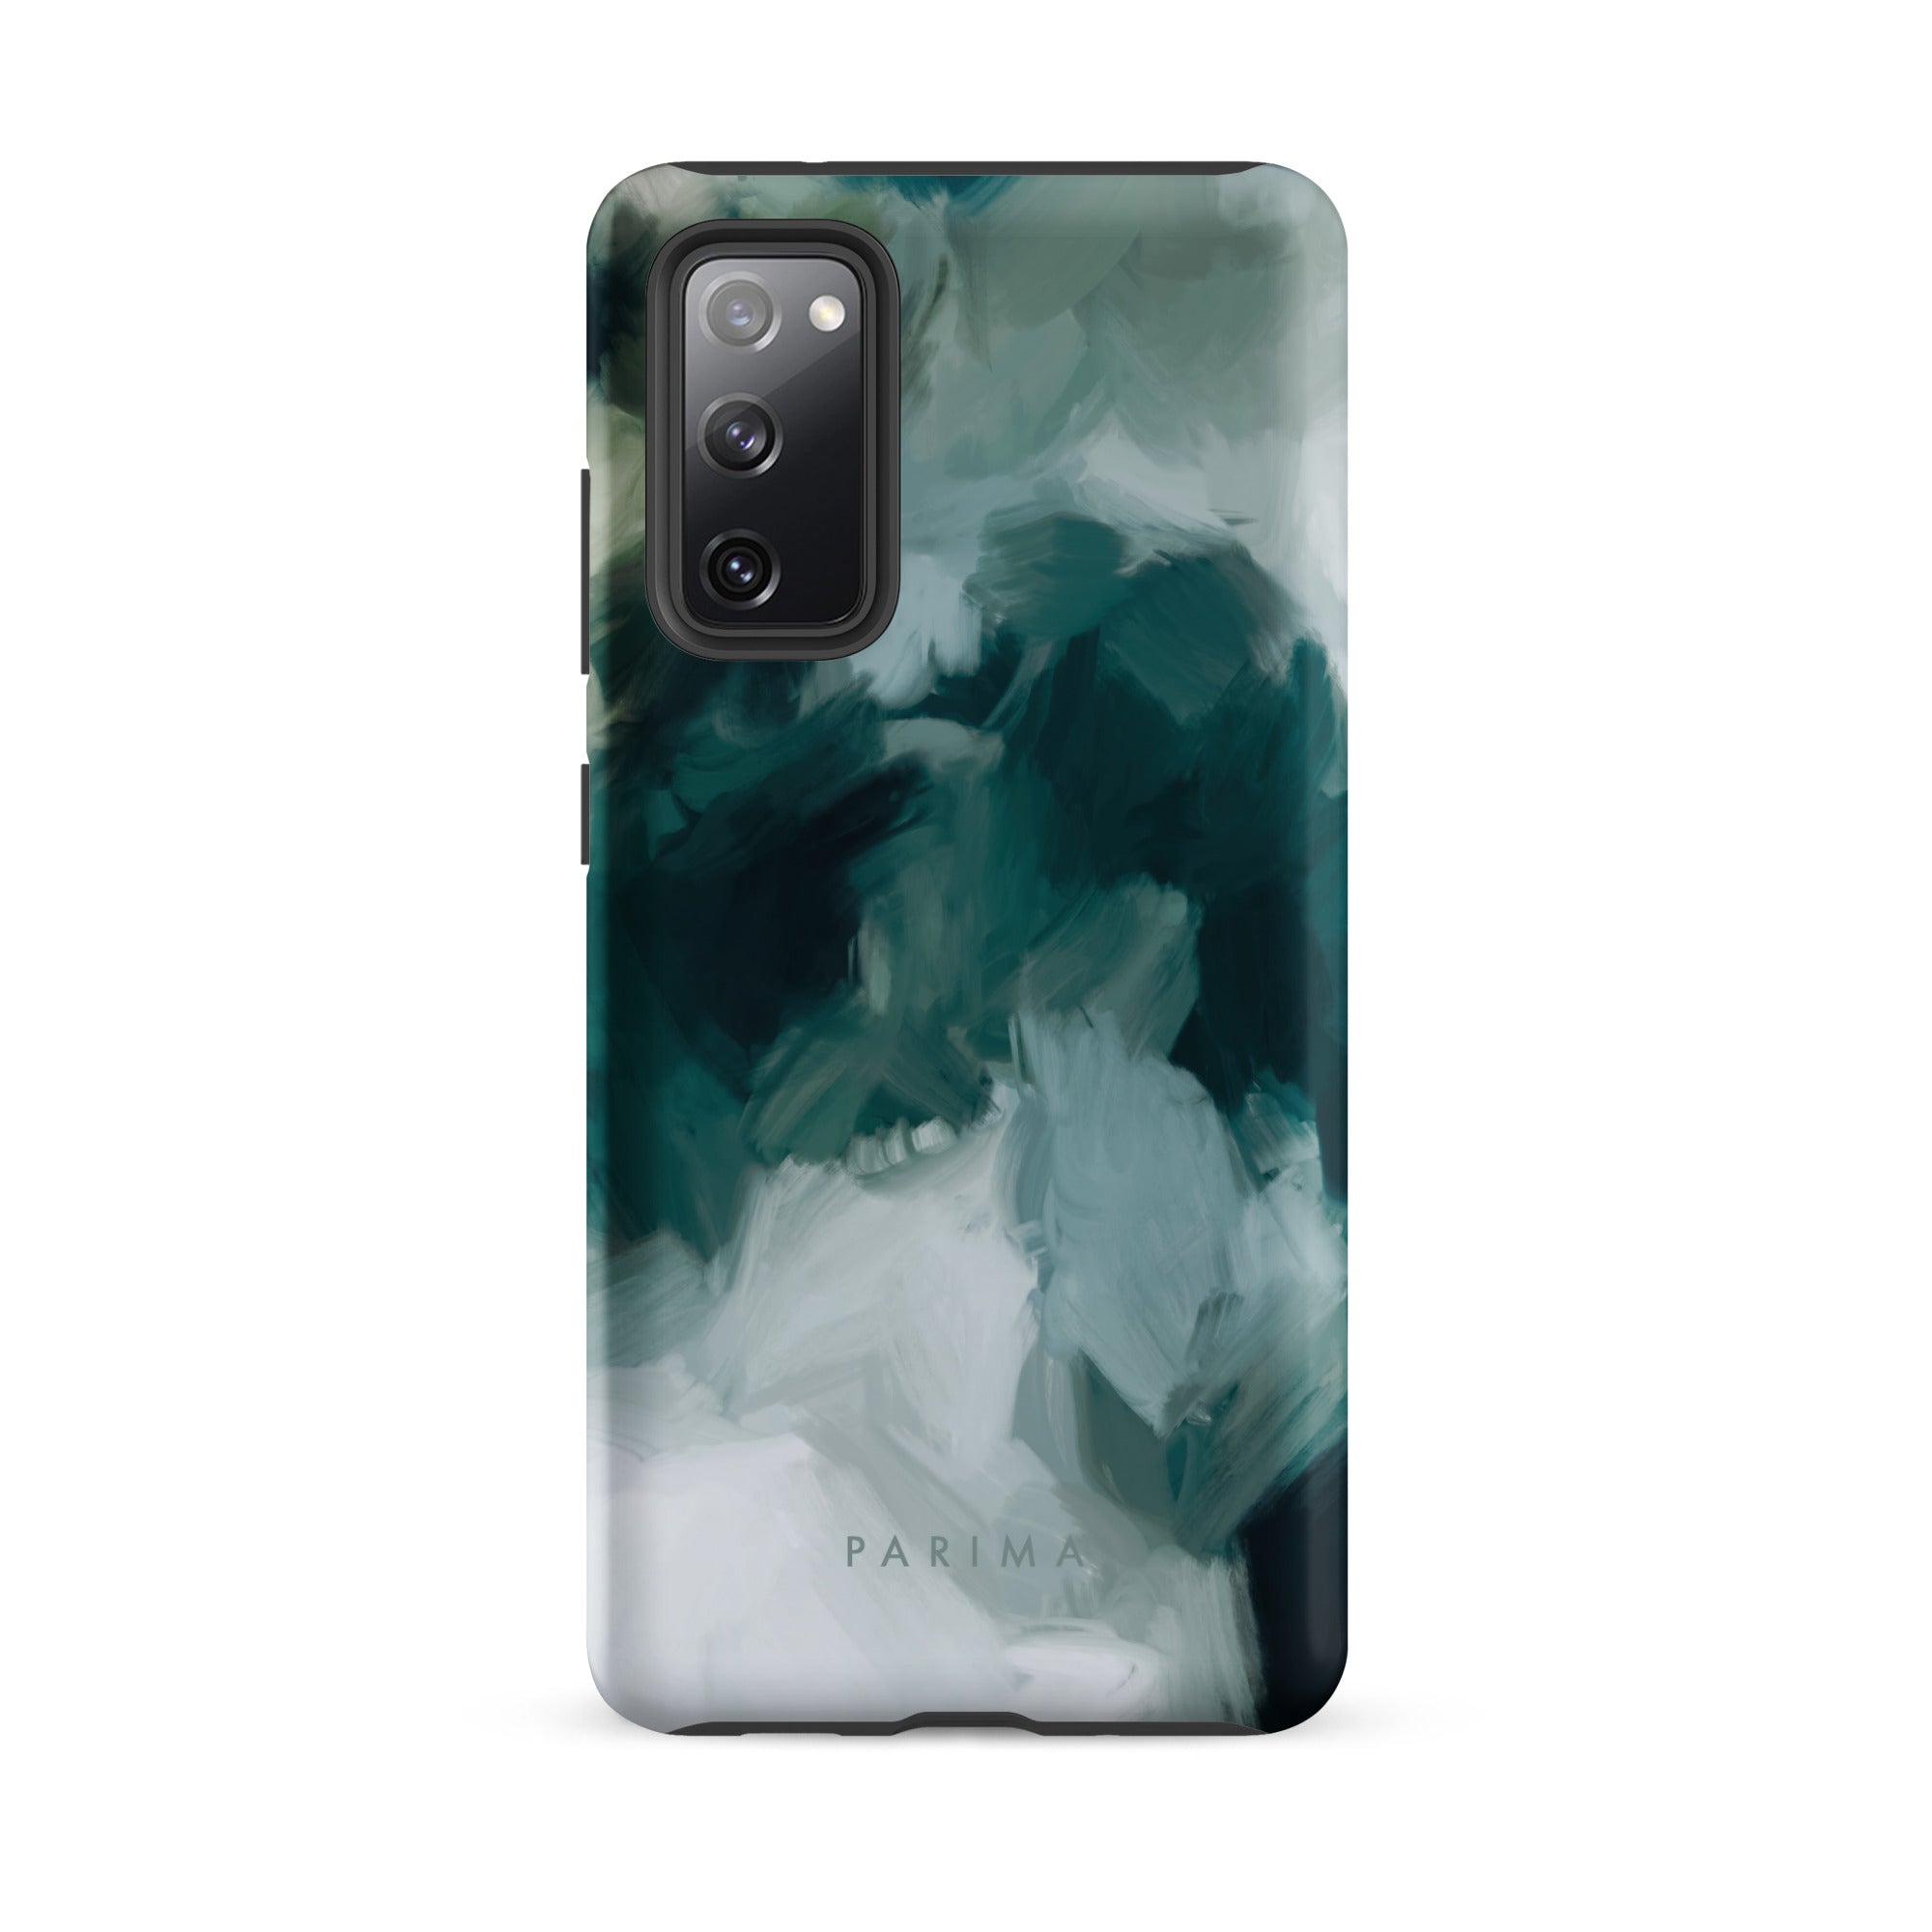 Echo, emerald green abstract art on Samsung Galaxy S20 FE tough case by Parima Studio